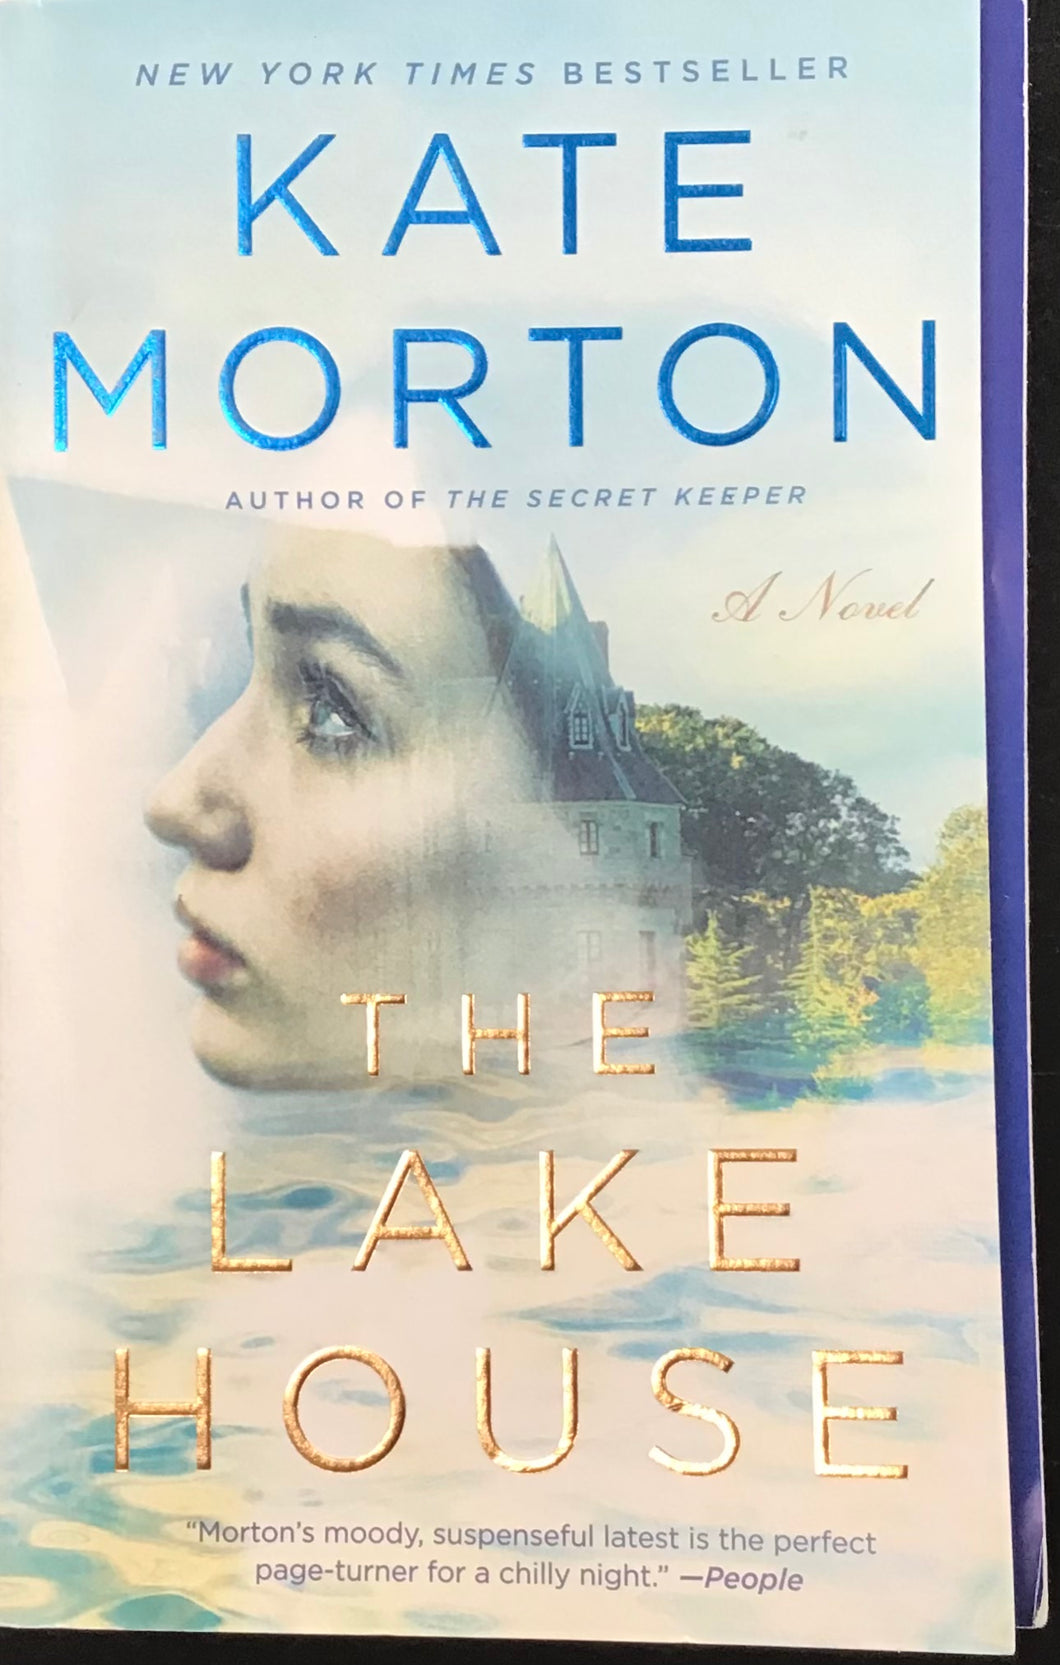 The Lake House, Kate Morton